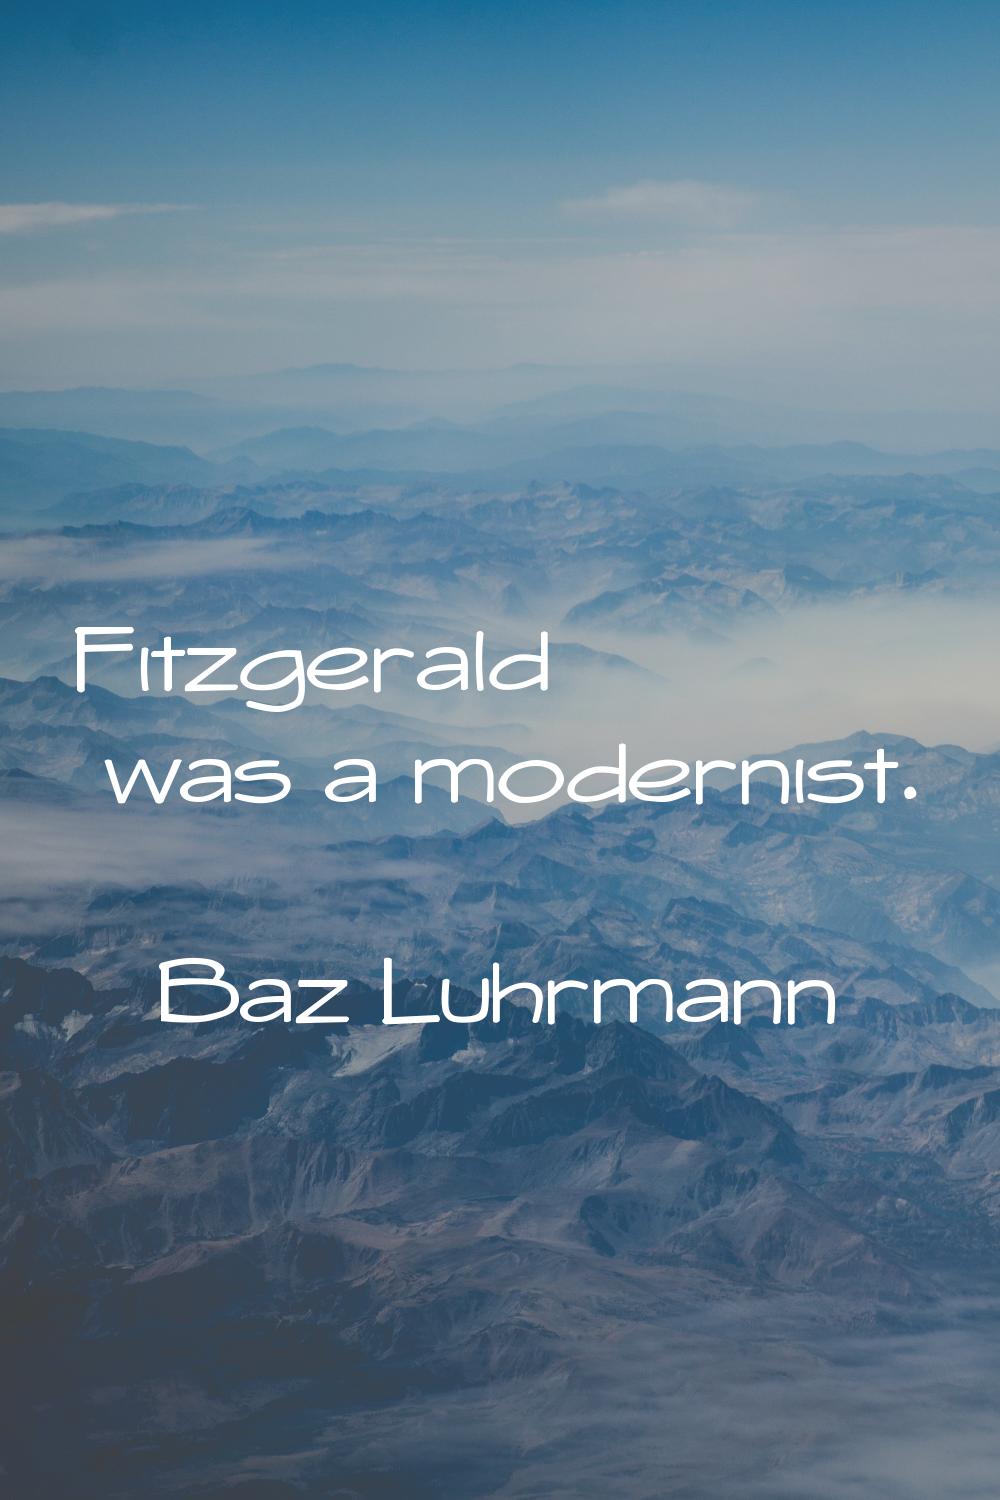 Fitzgerald was a modernist.